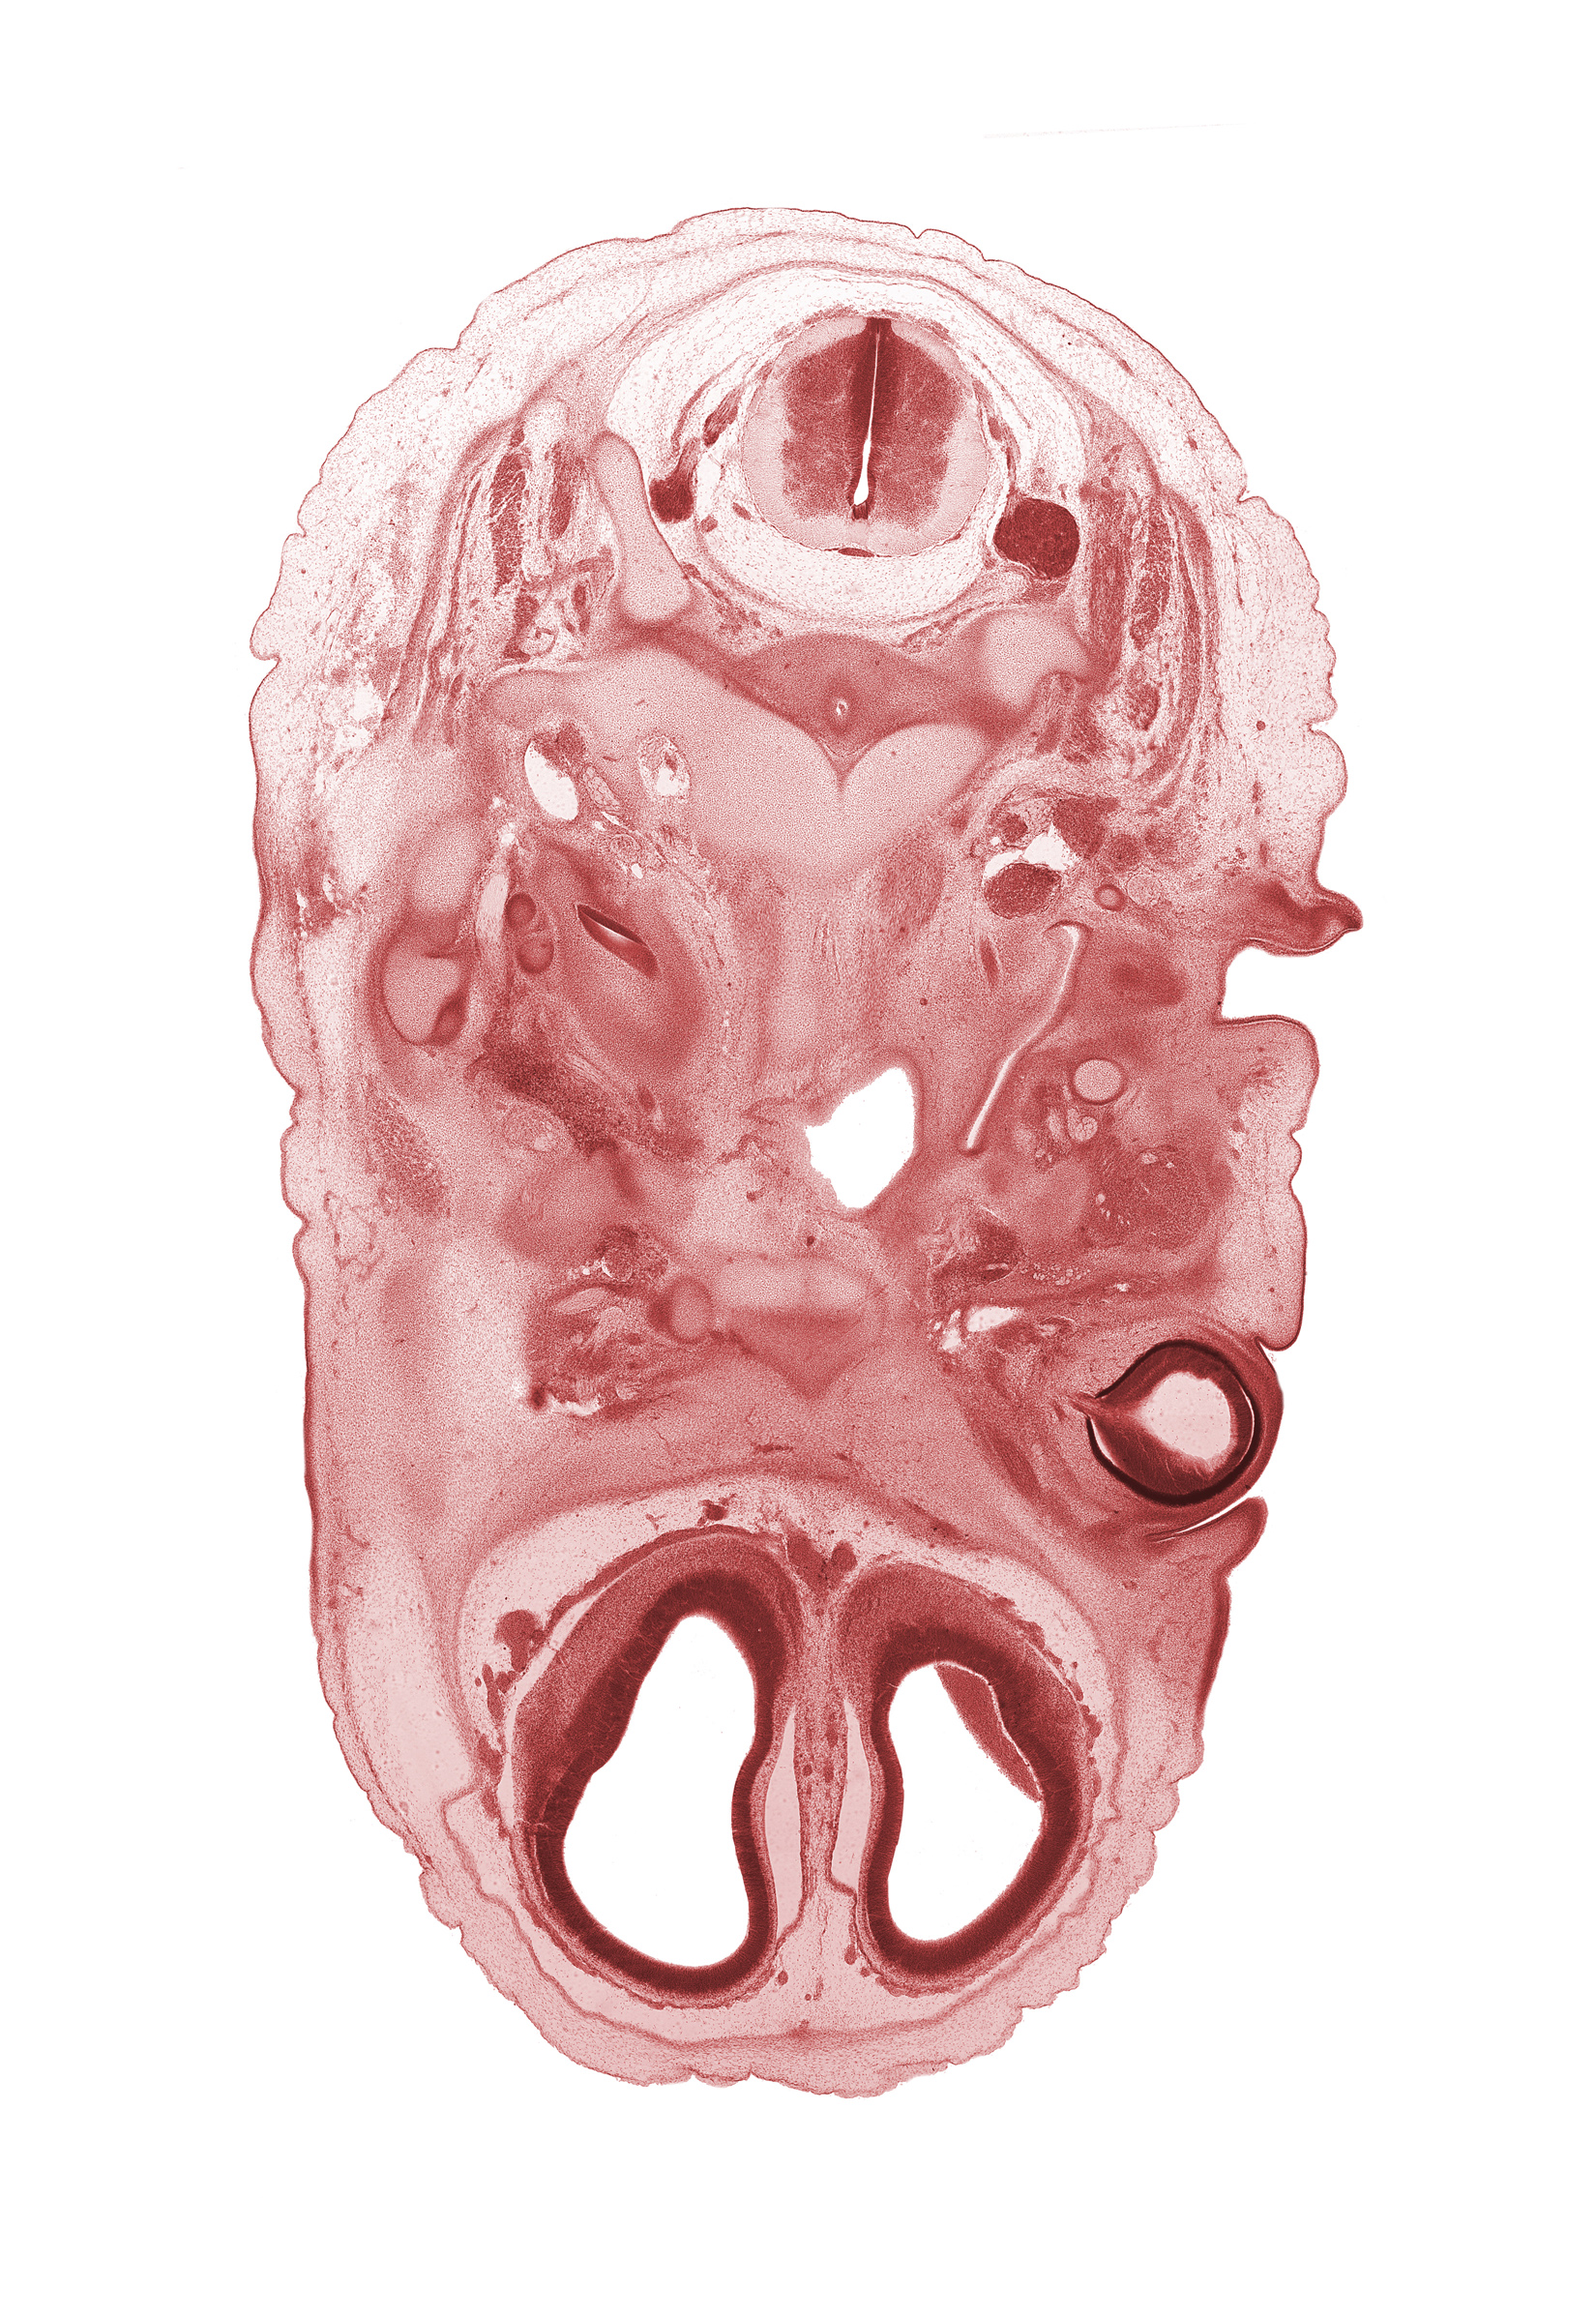 C-2 dorsal root, C-2 spinal ganglion, anterior communicating artery, artifact separation(s), atlanto-occipital joint, basi-occipital (basal plate), basisphenoid, dens of C-2 vertebra (axis), edge of cochlear duct, edge of pharynx, facial nerve (CN VII), hypoglossal nerve (CN XII), inferior ganglion of glossopharyngeal nerve (CN IX), internal jugular vein, lateral ventricle, malleus cartilage, maxillary nerve (CN V₂), maxillary vein, olfactory bulb, optic nerve (CN II), osteogenic layer, semispinalis cervicis muscle, upper eyelid, vagus nerve (CN X), vertebral artery